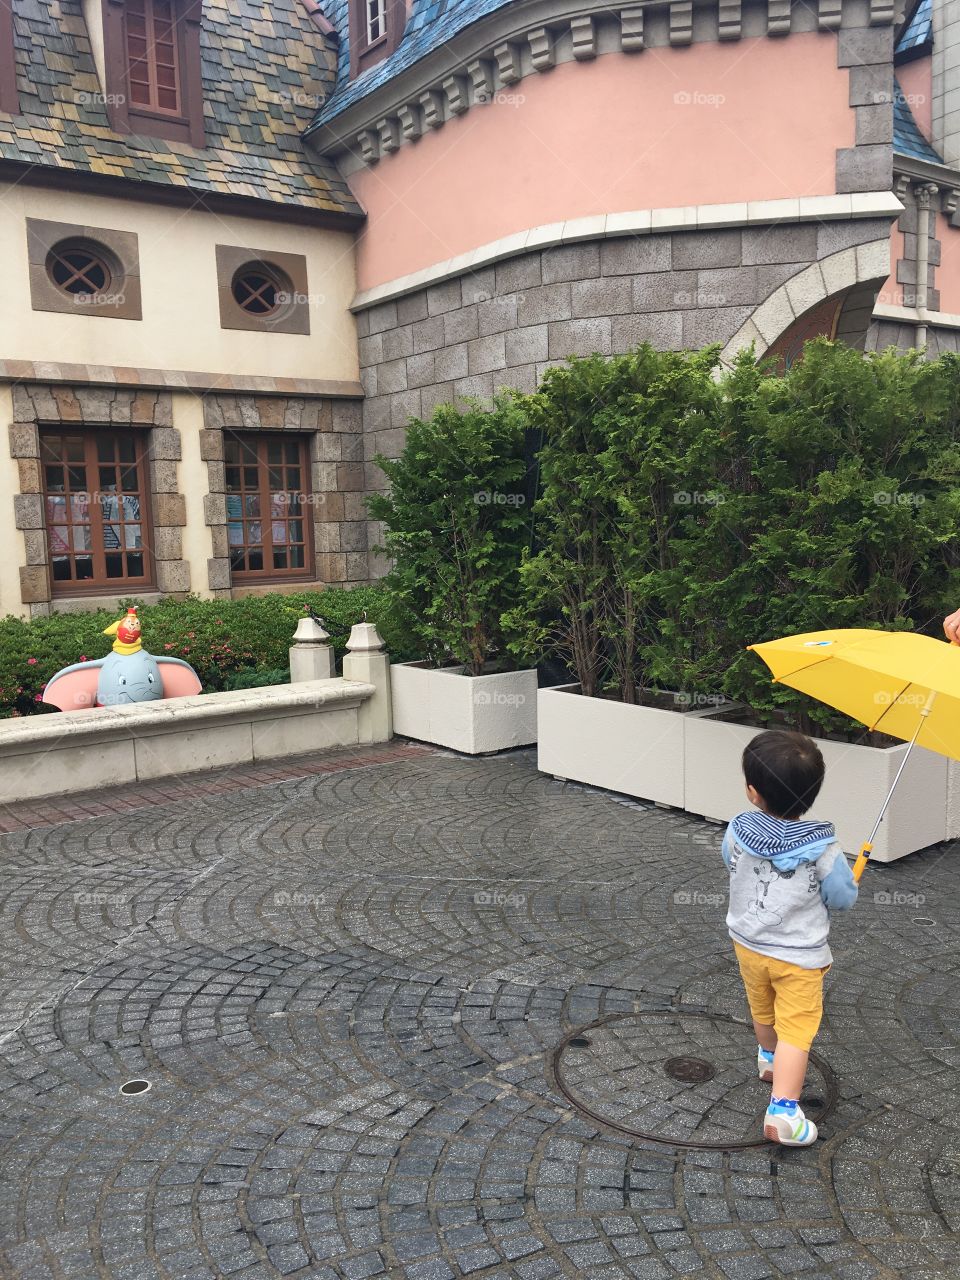 Rain at Tokyo Disney land 